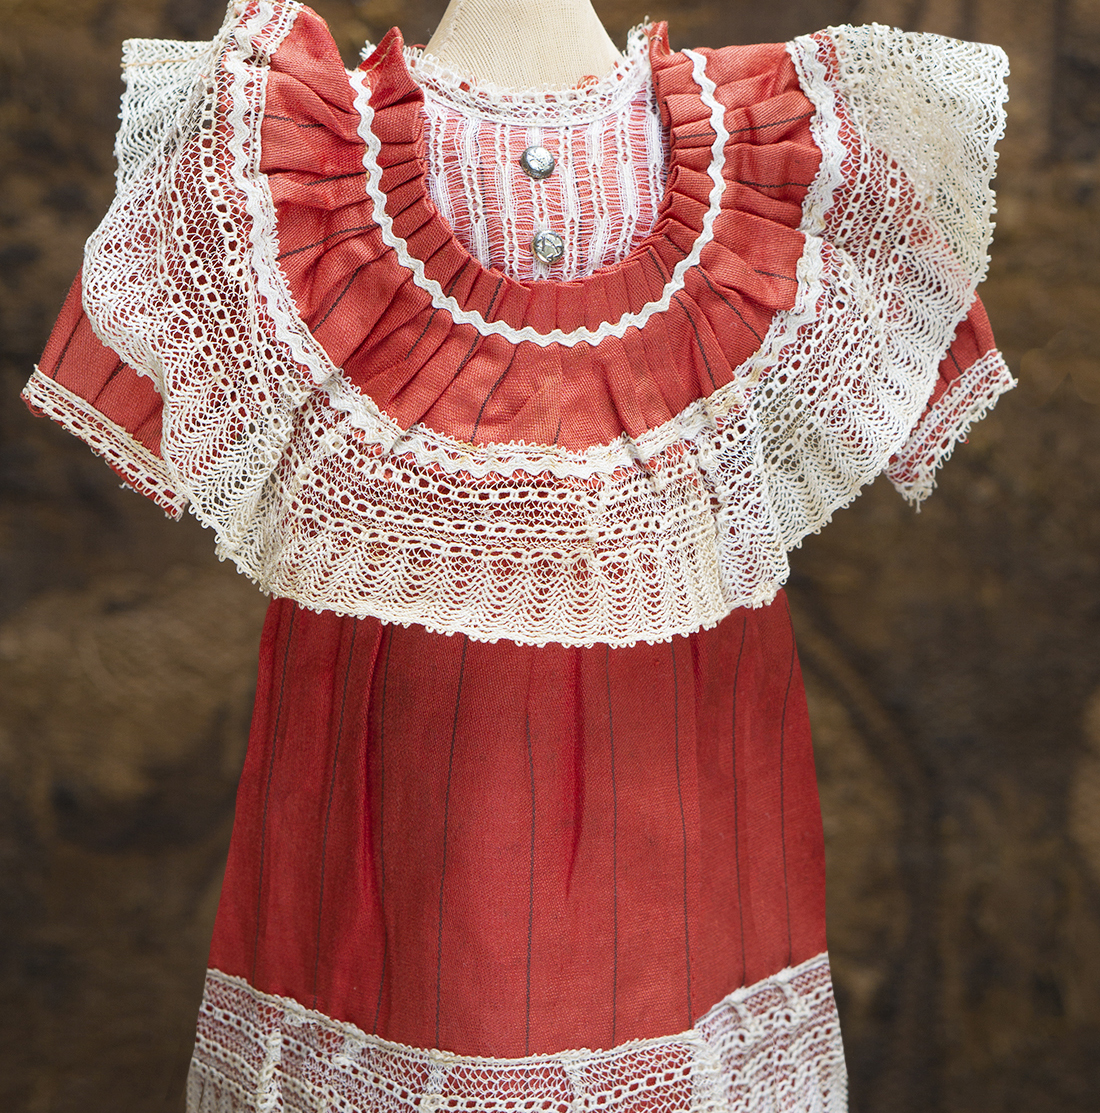 Antique doll dress